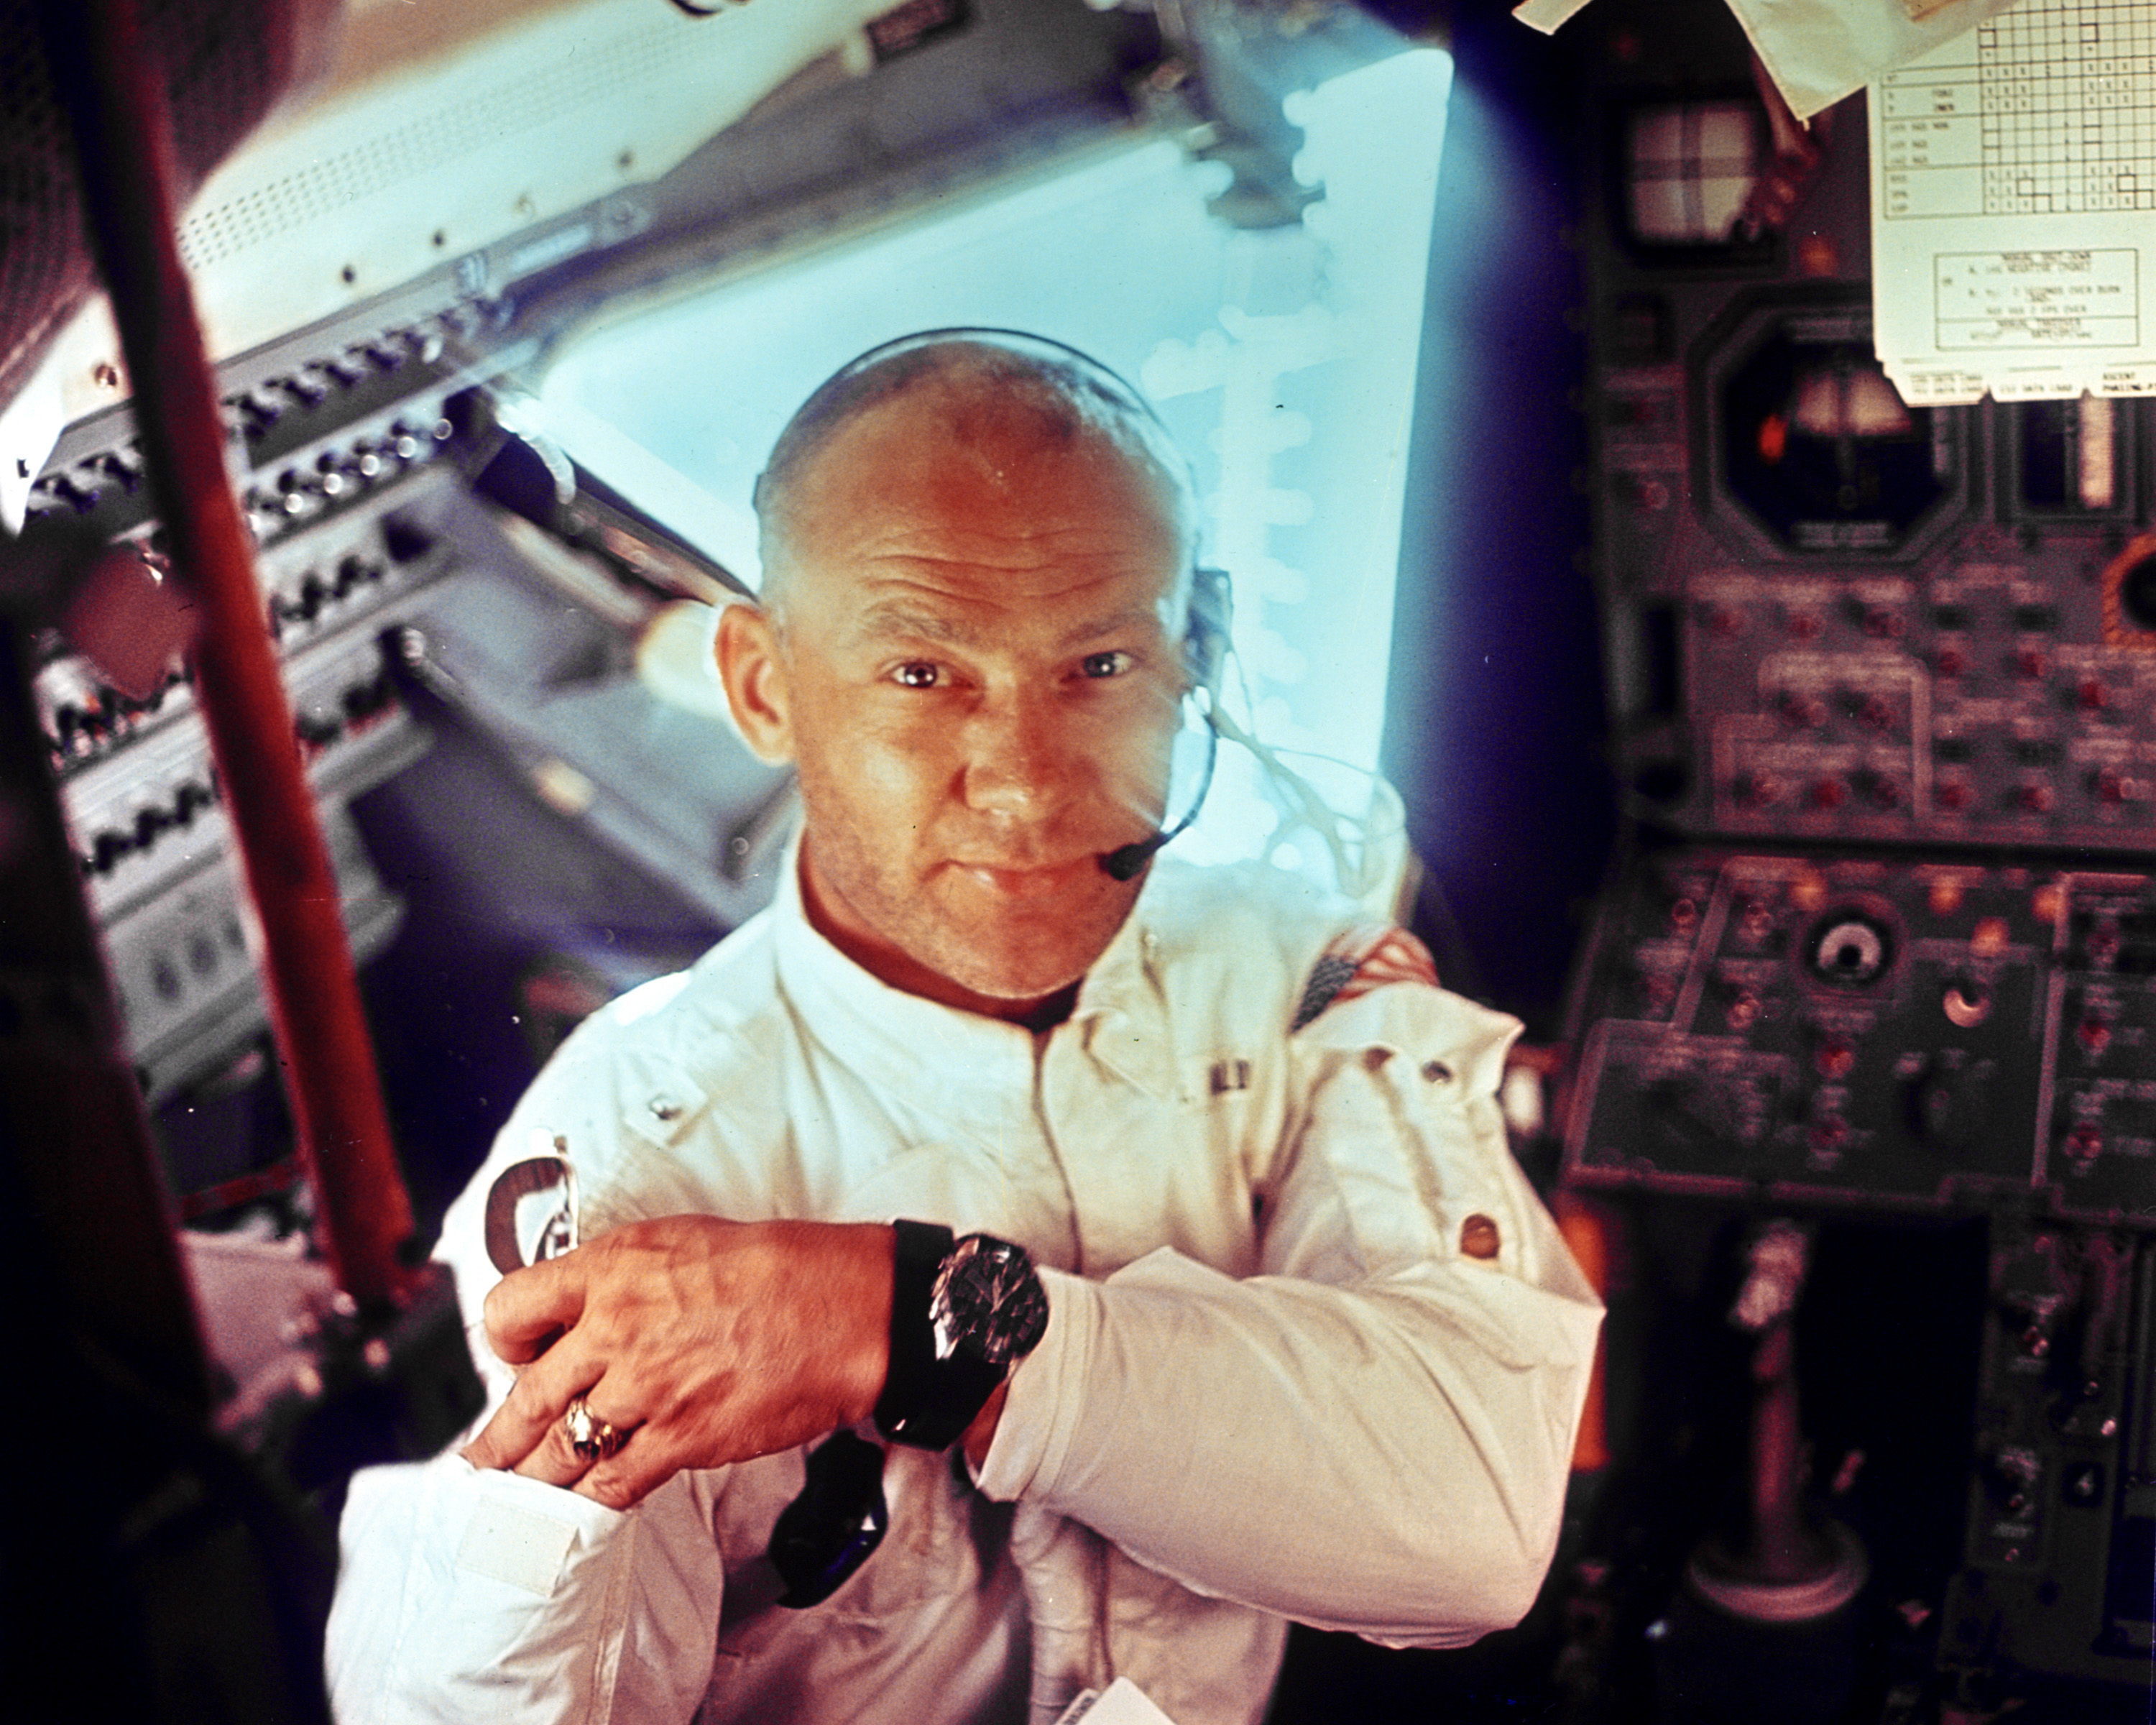 BUzz Aldrin wearing his Omega Speedmaster